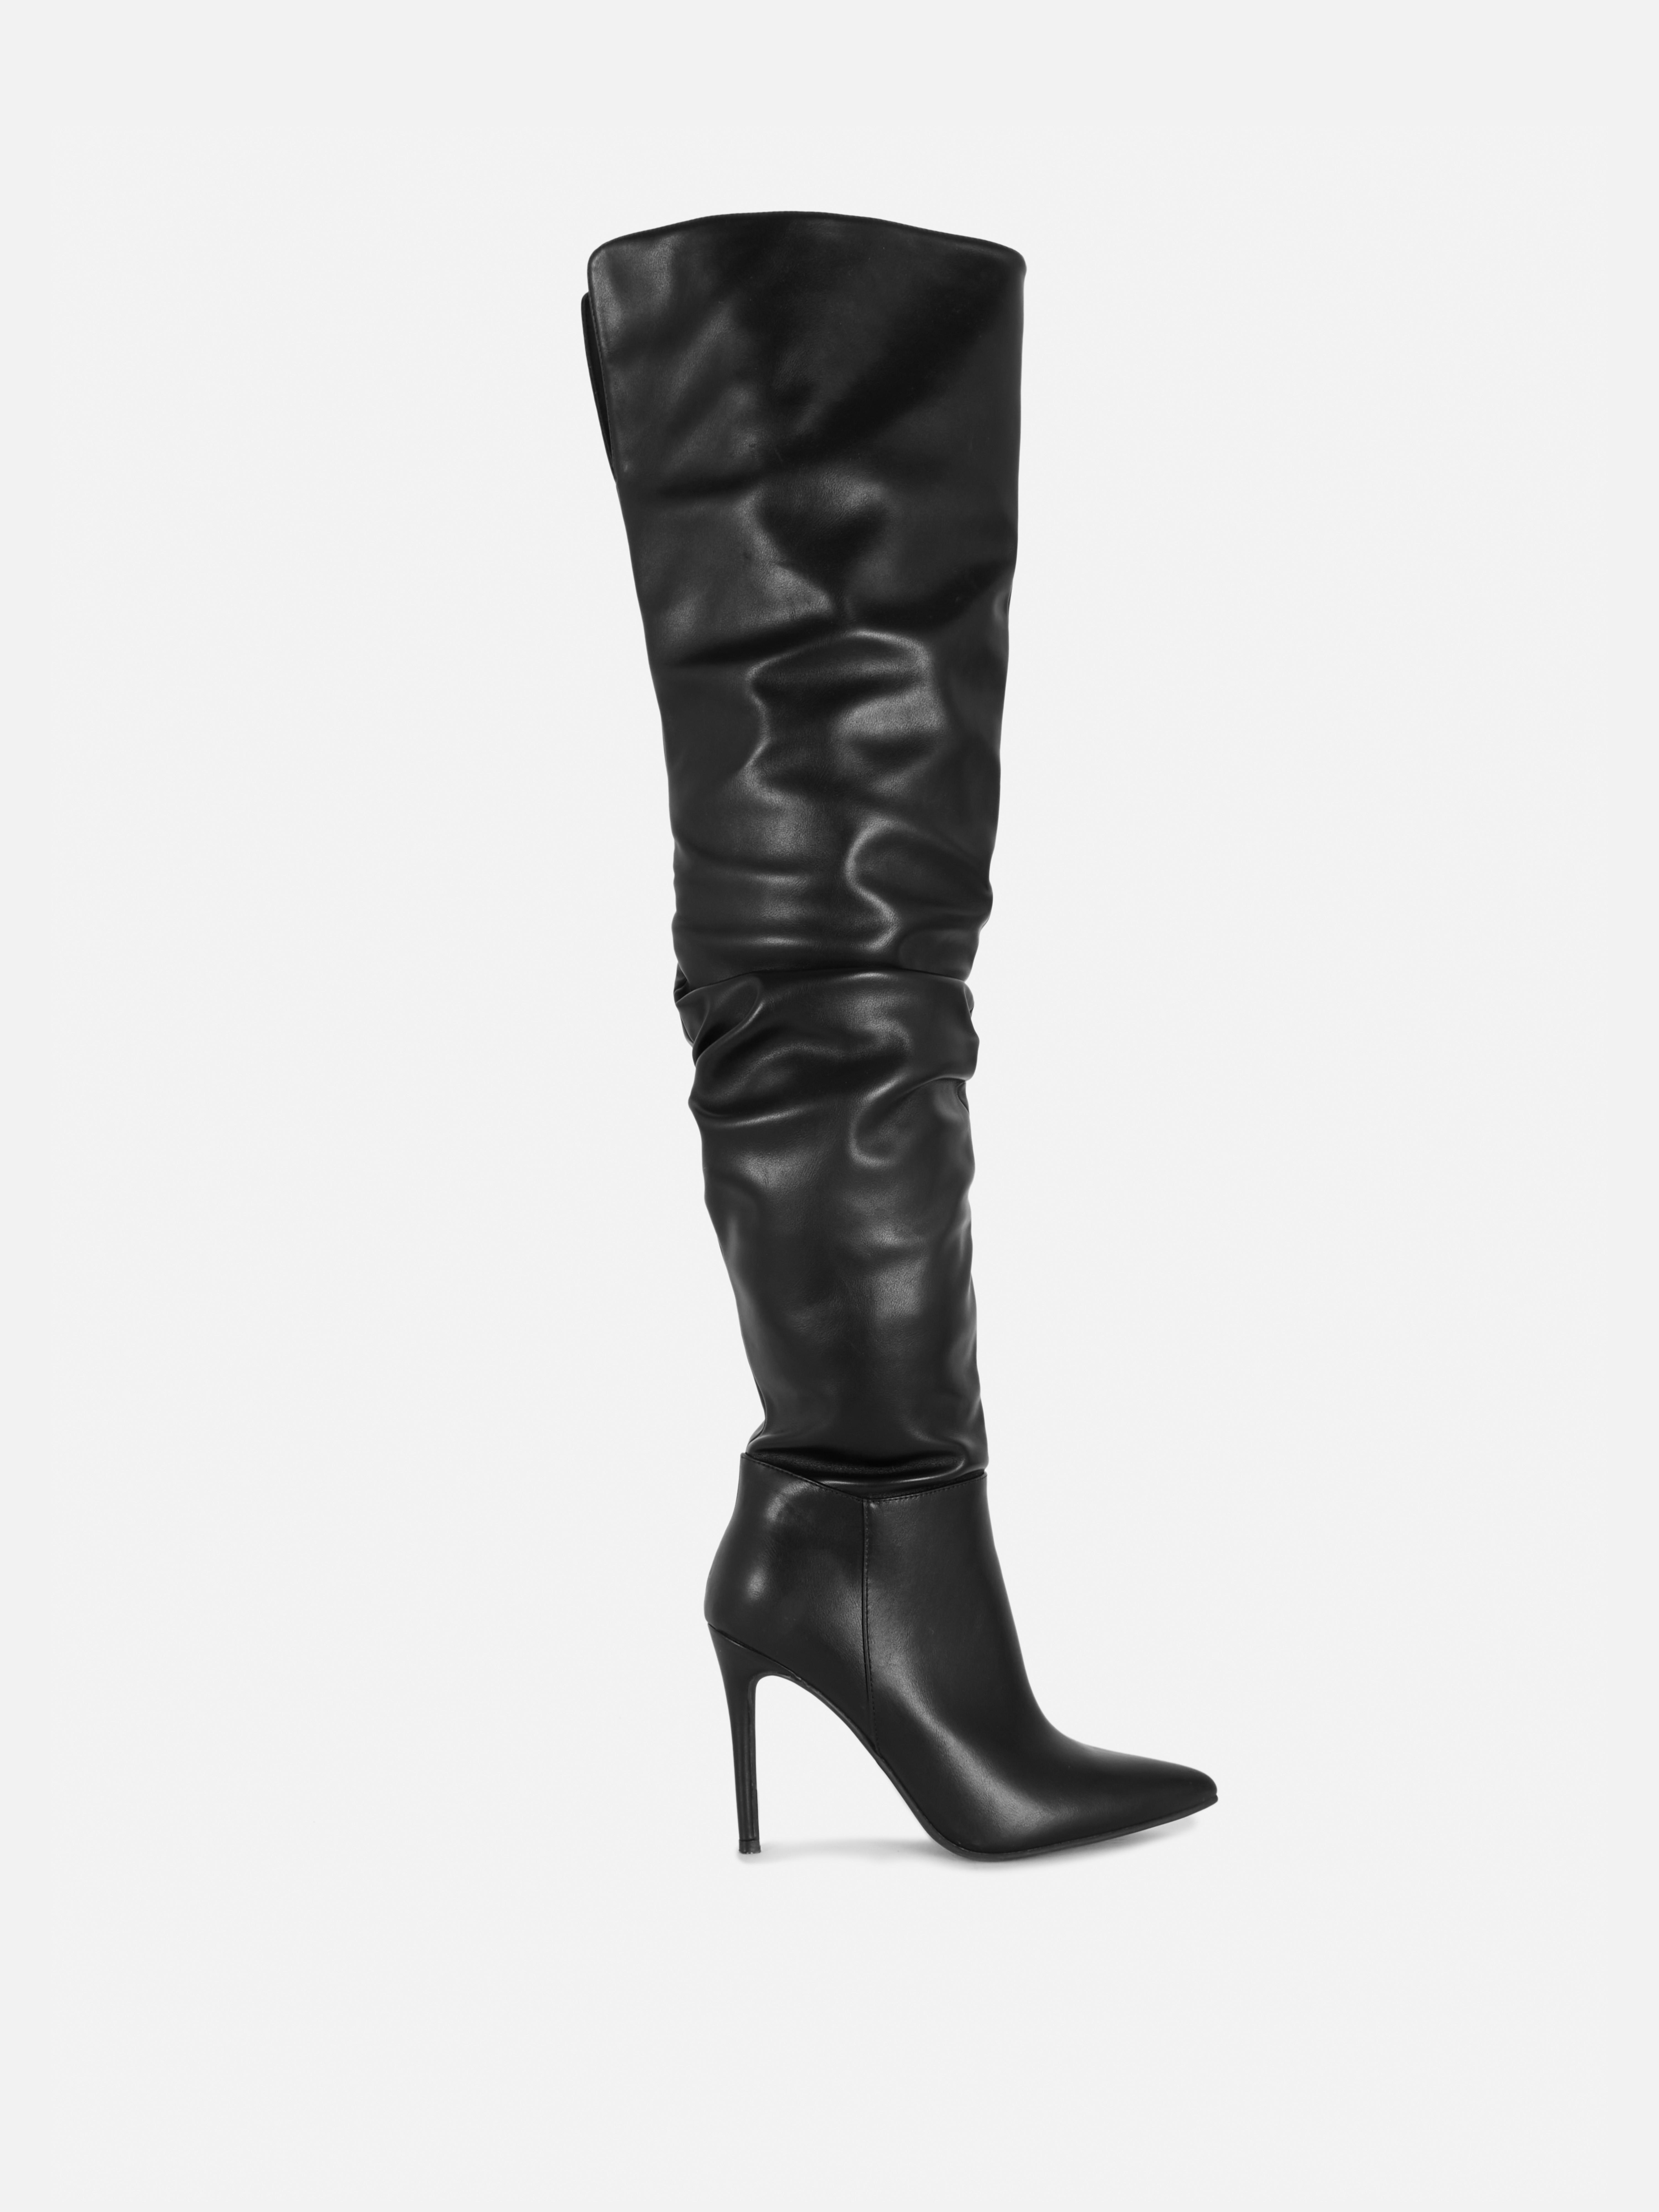 Rita Ora Thigh-High Ruched Stiletto Boots